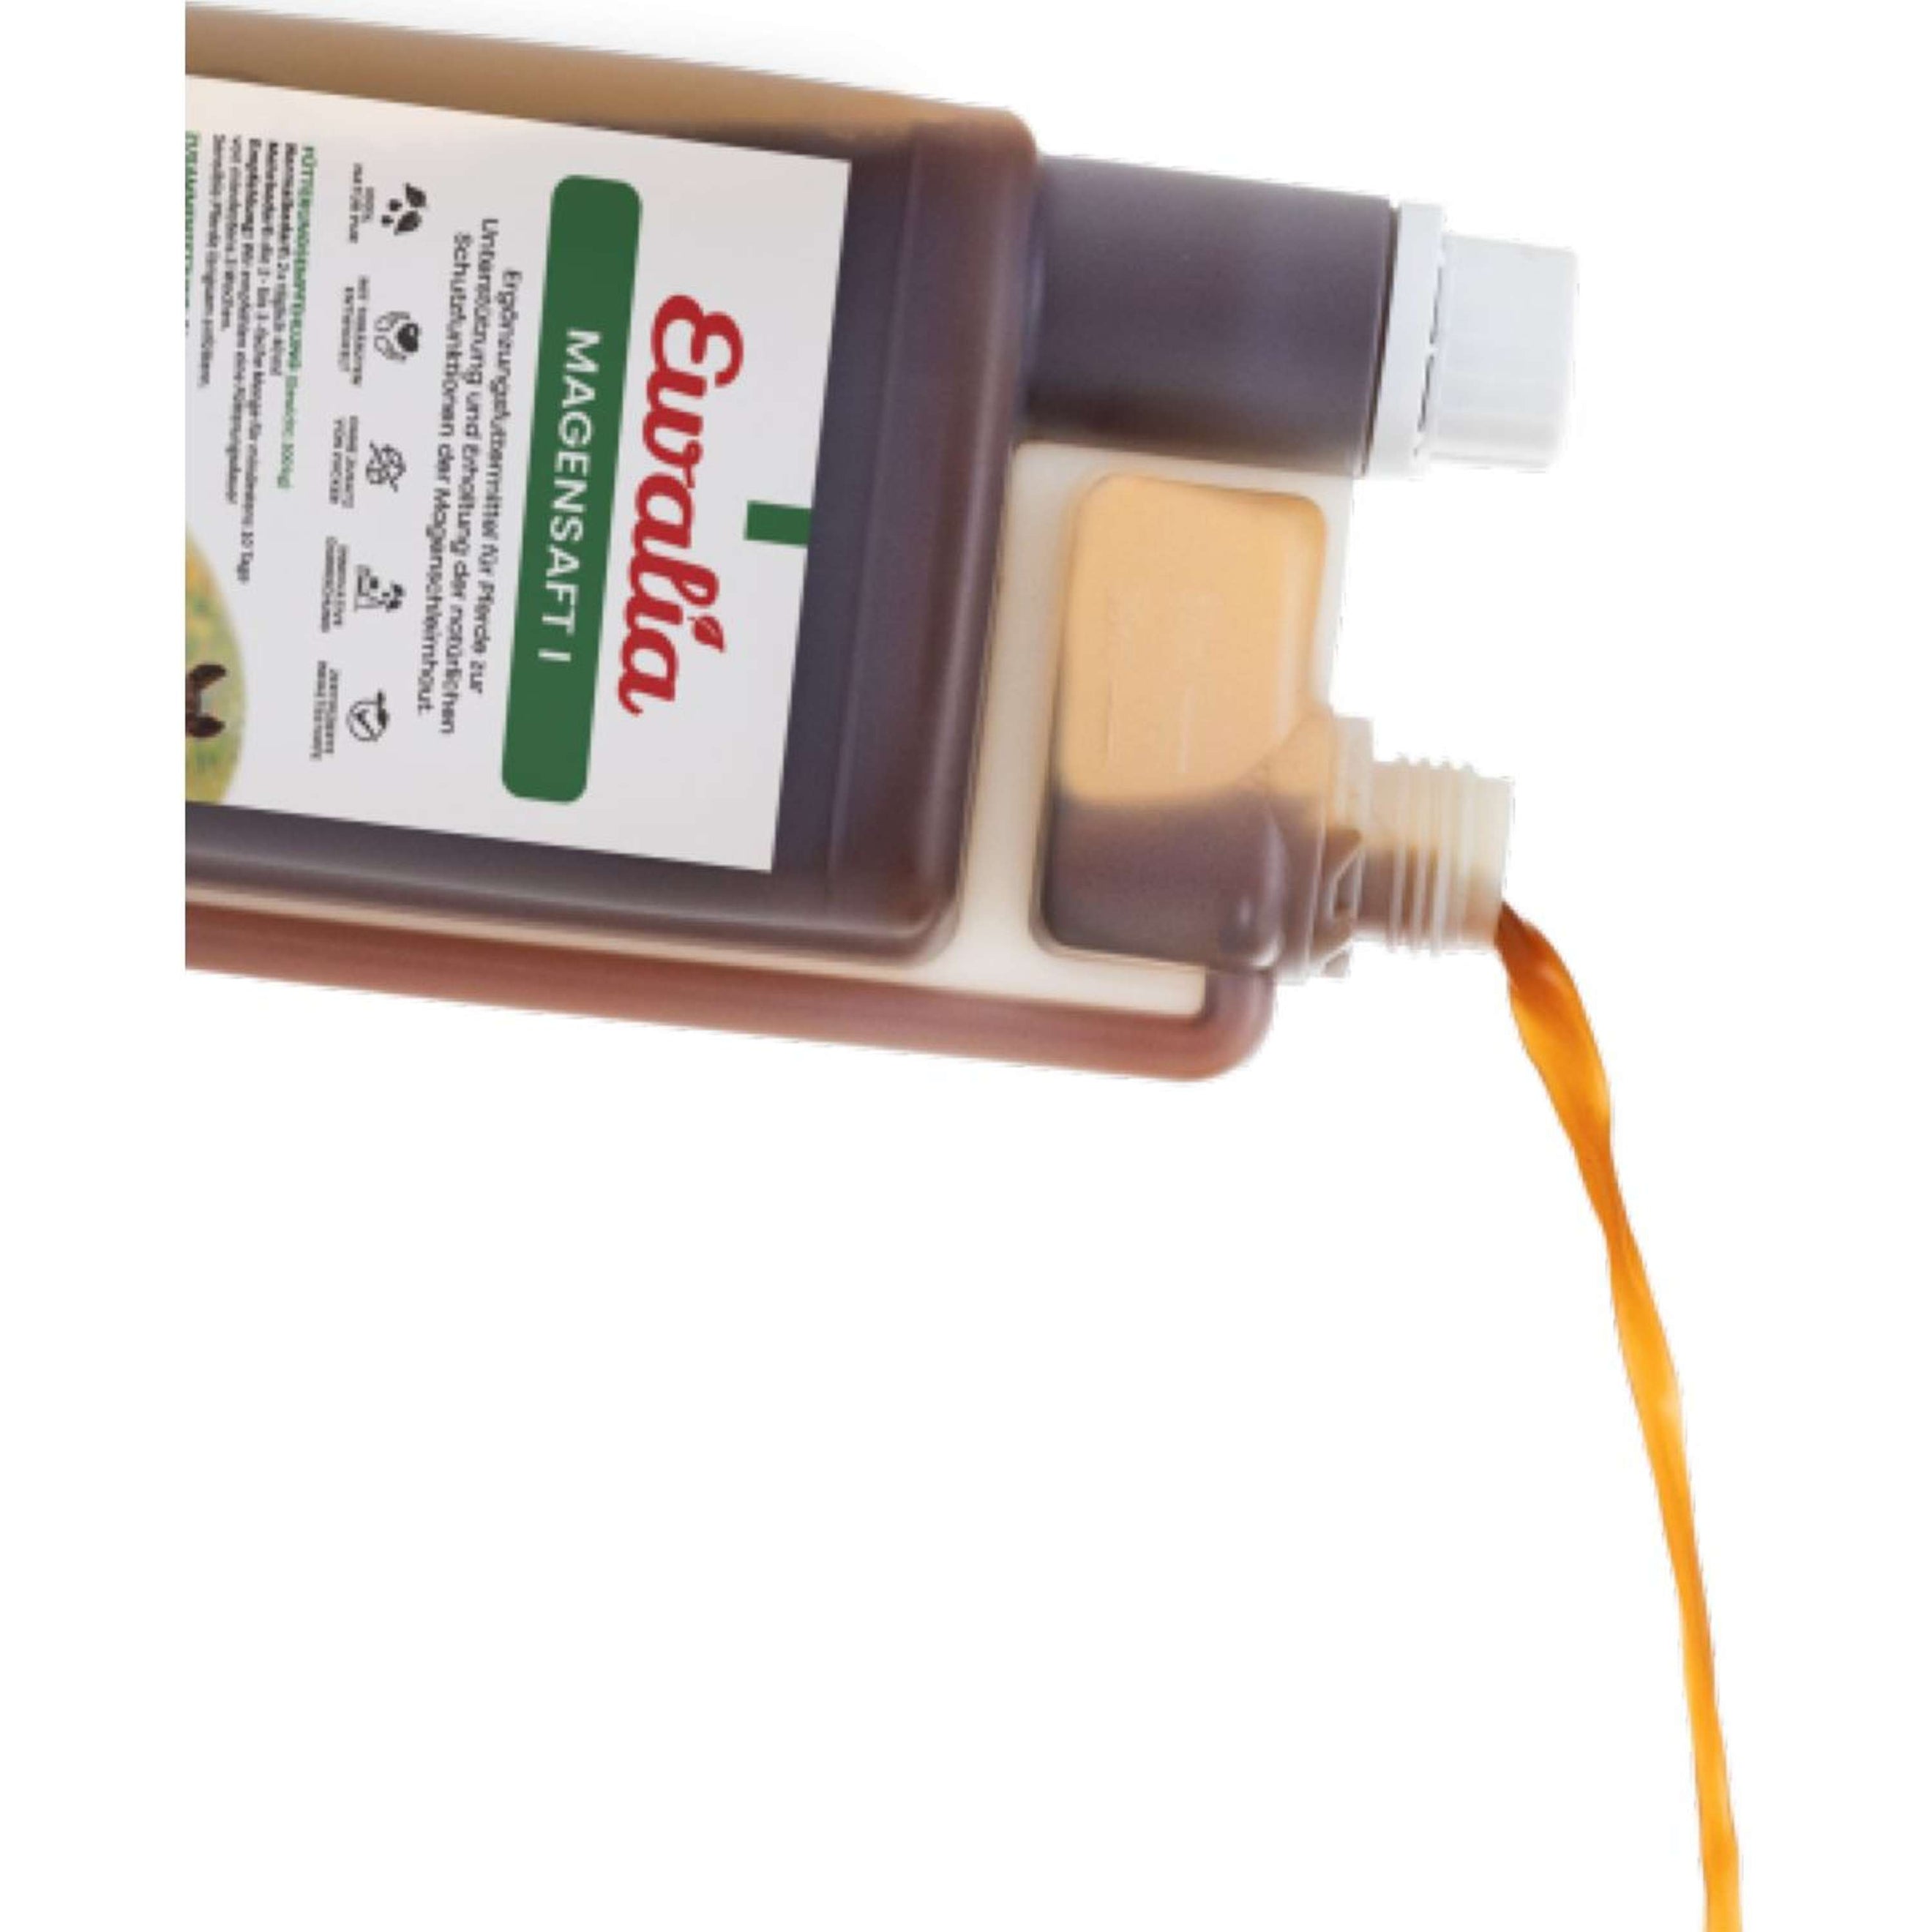 Ewalia Gastro Care Liquid I